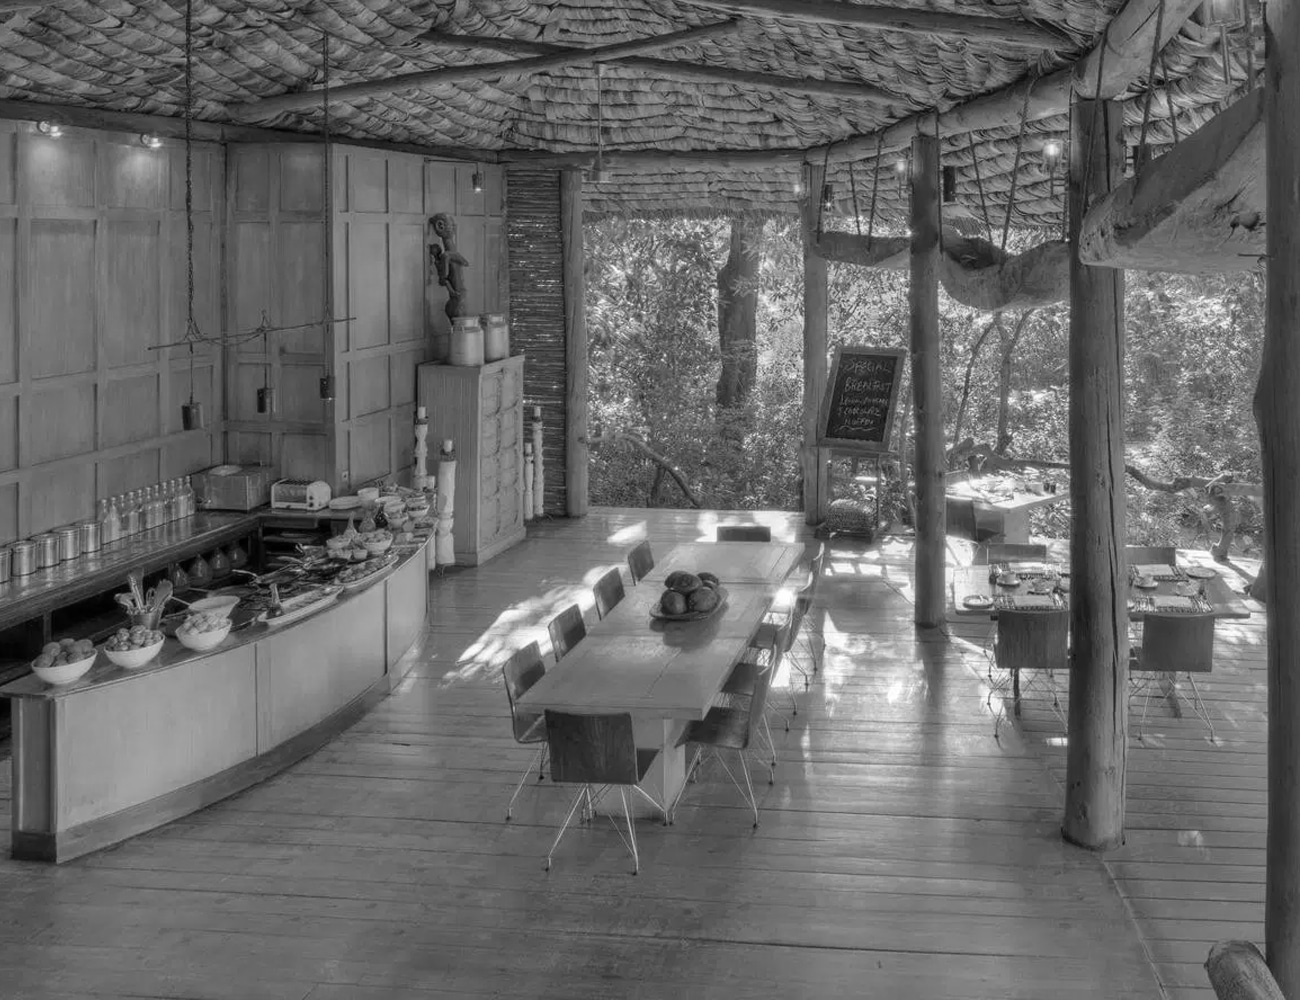 Dining Setup at Manyara Tree Lodge